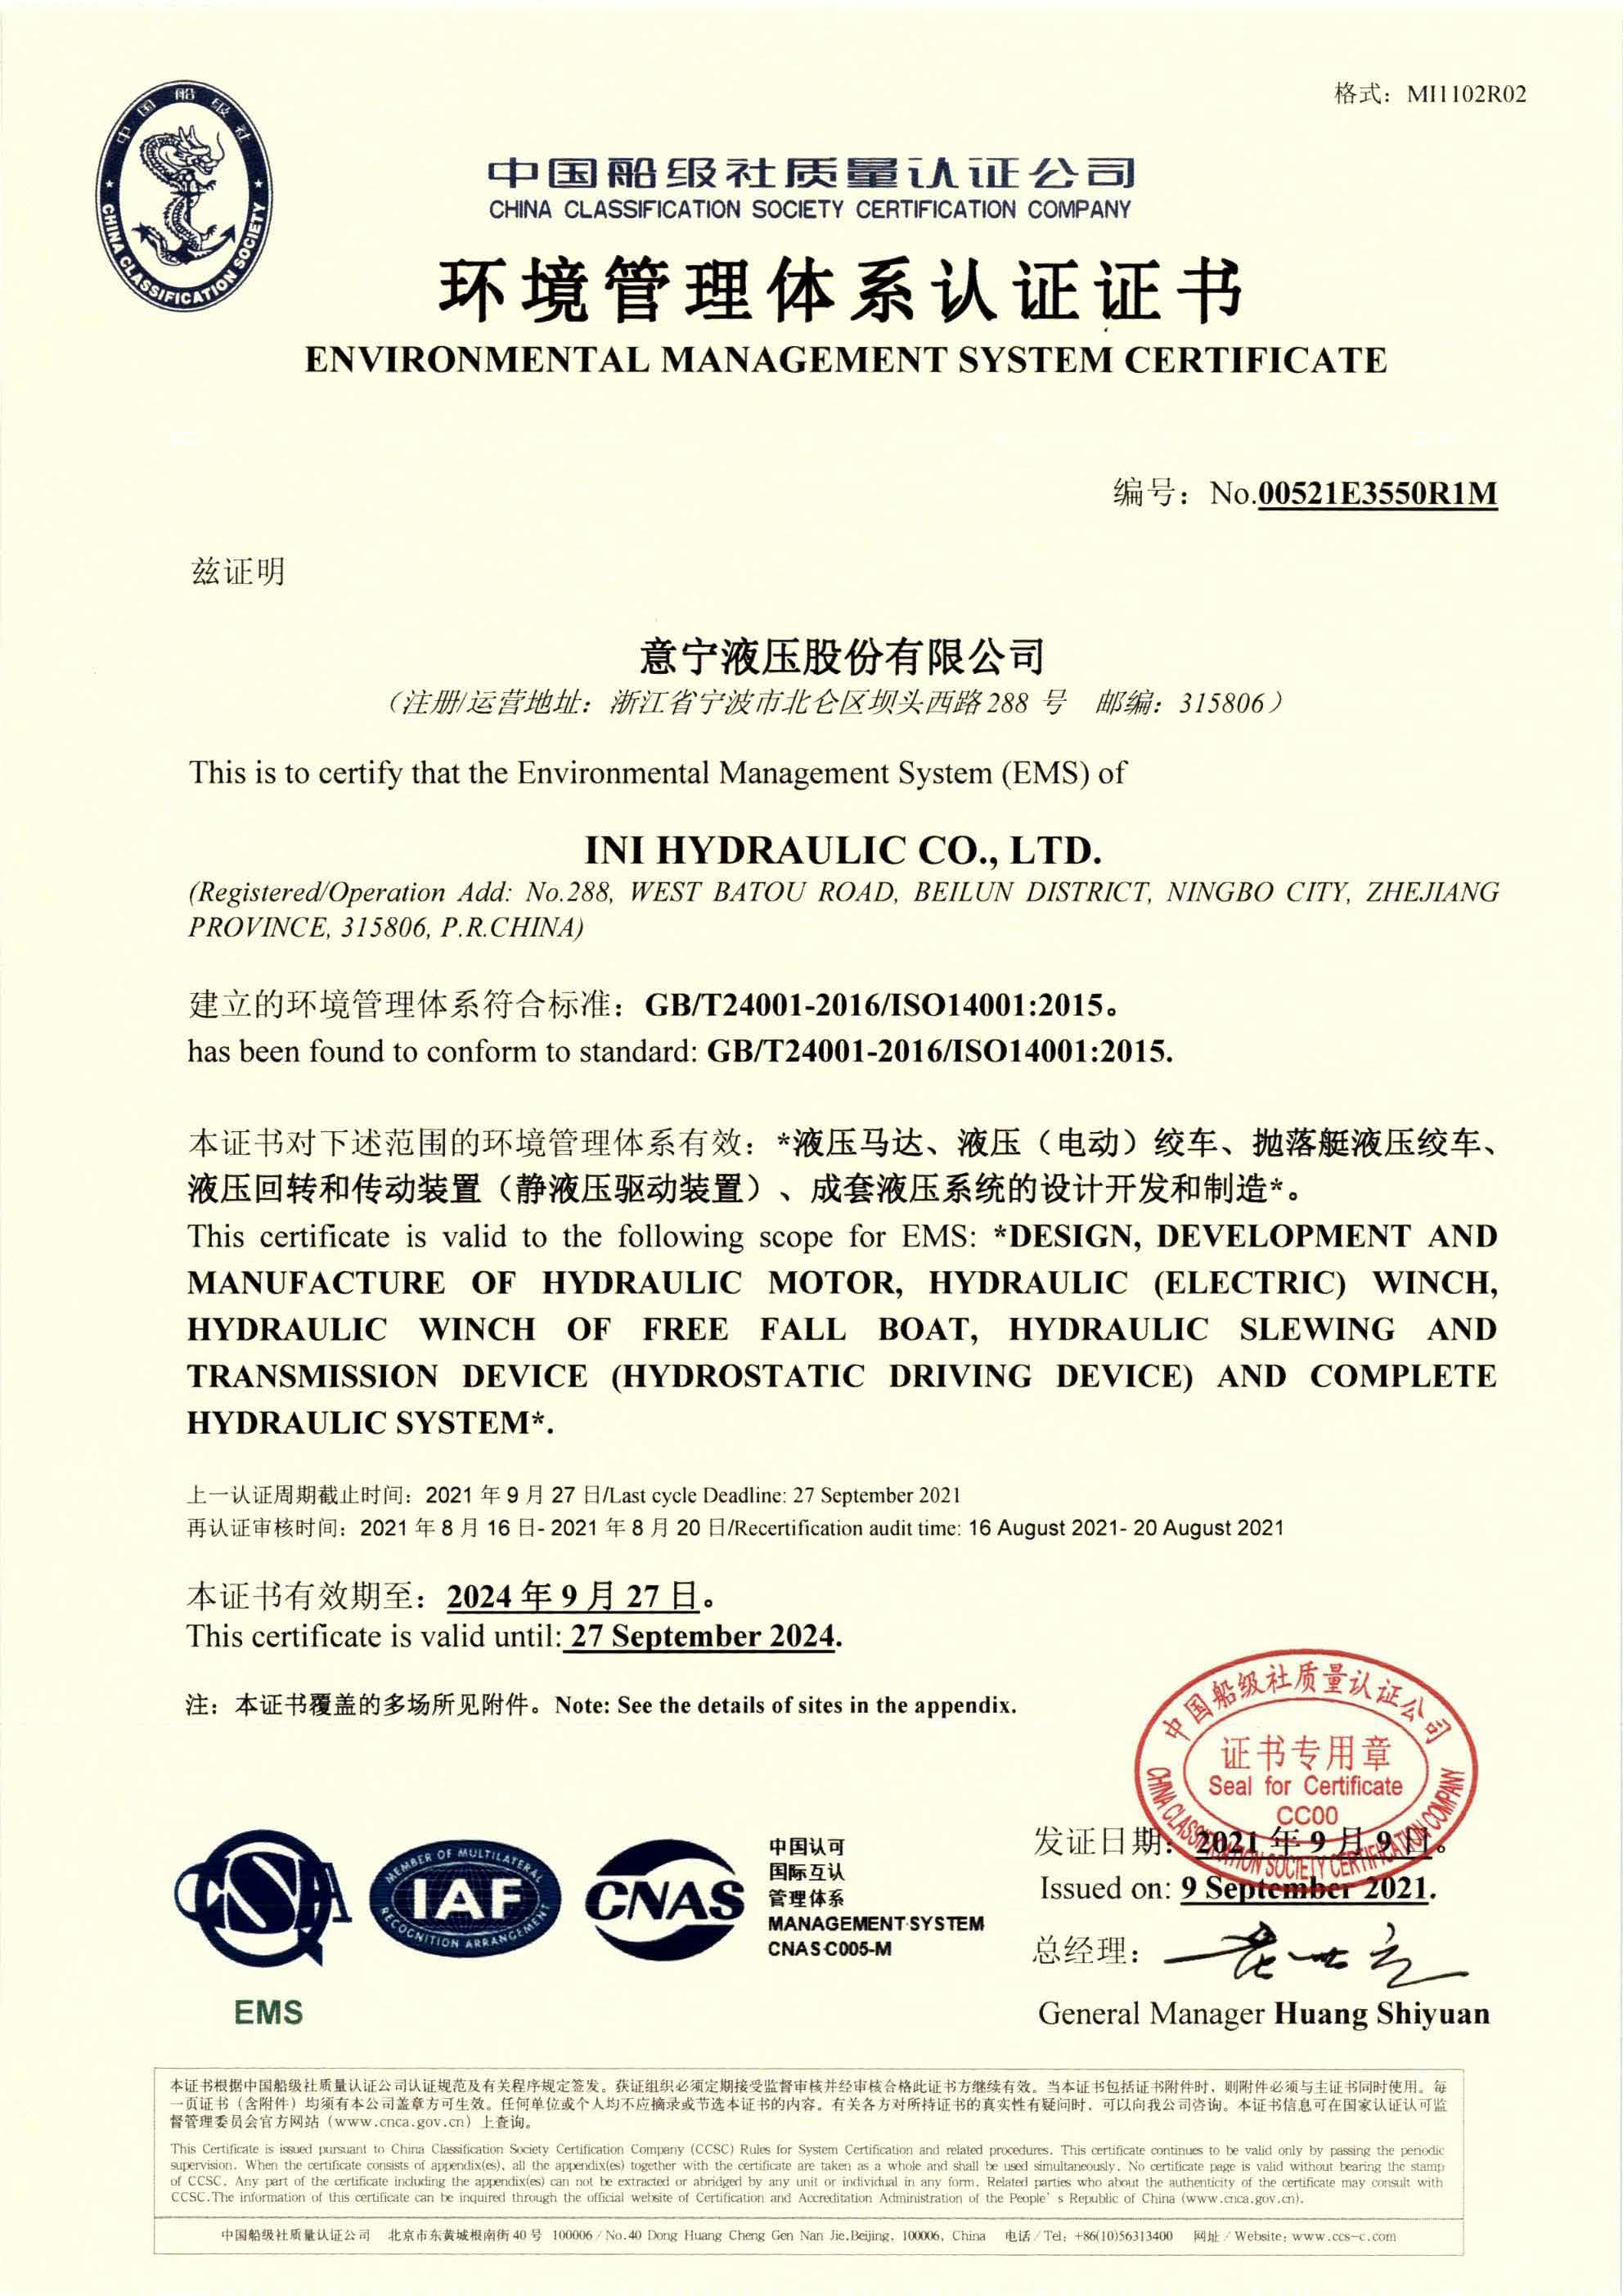 CCS Environmental Management Certificate,2021 p1